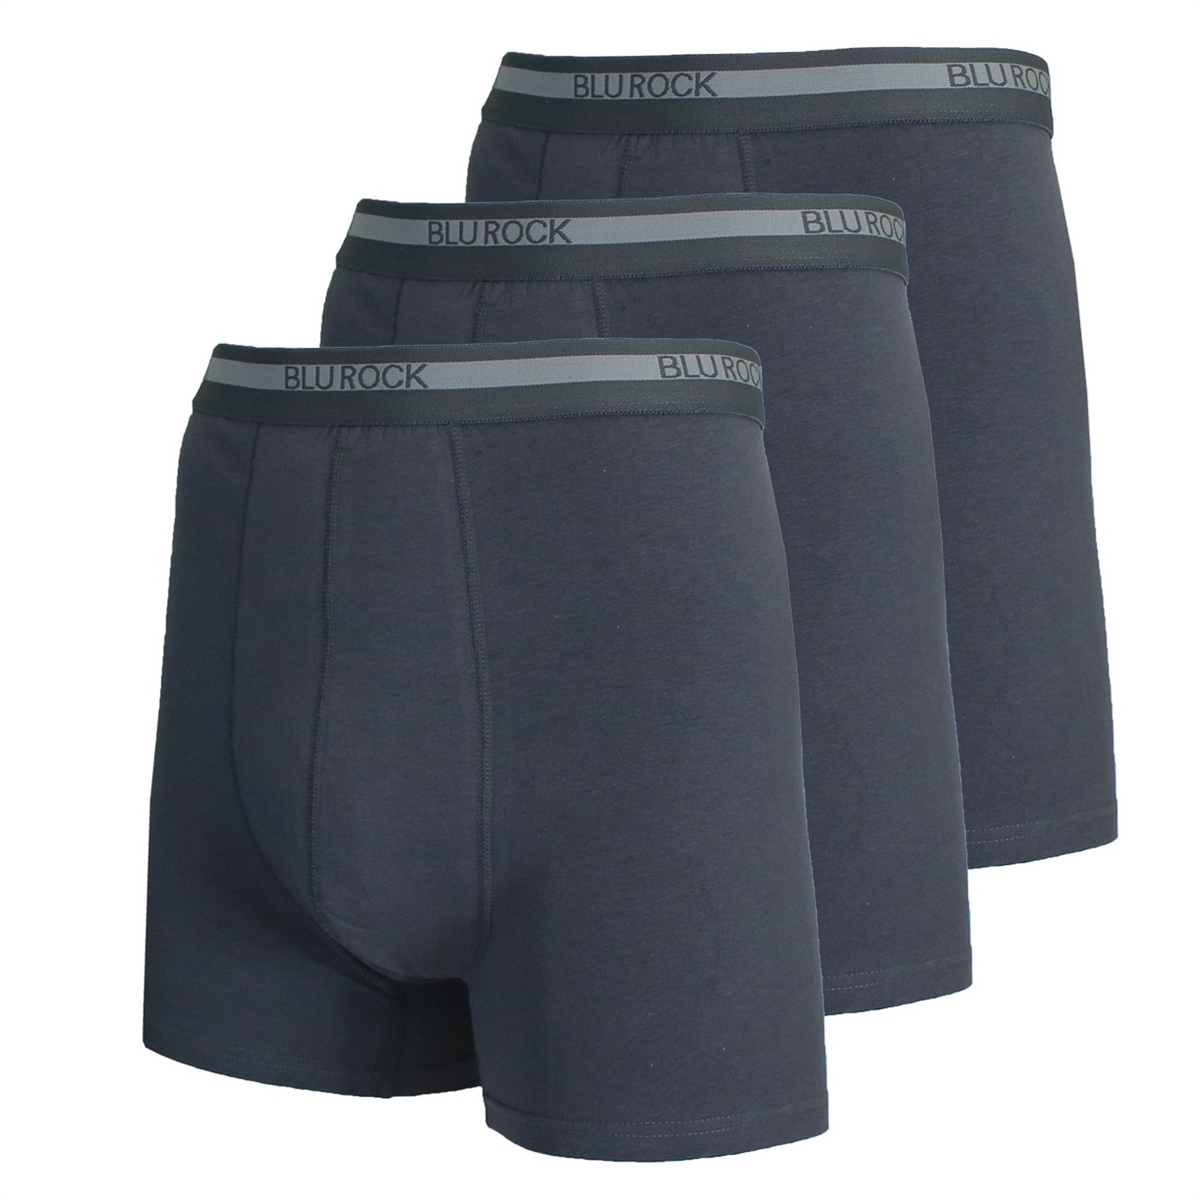 NEW Gap Cotton Blend Stretch Boxer Briefs 3-Pack Black Gray Camo Small 